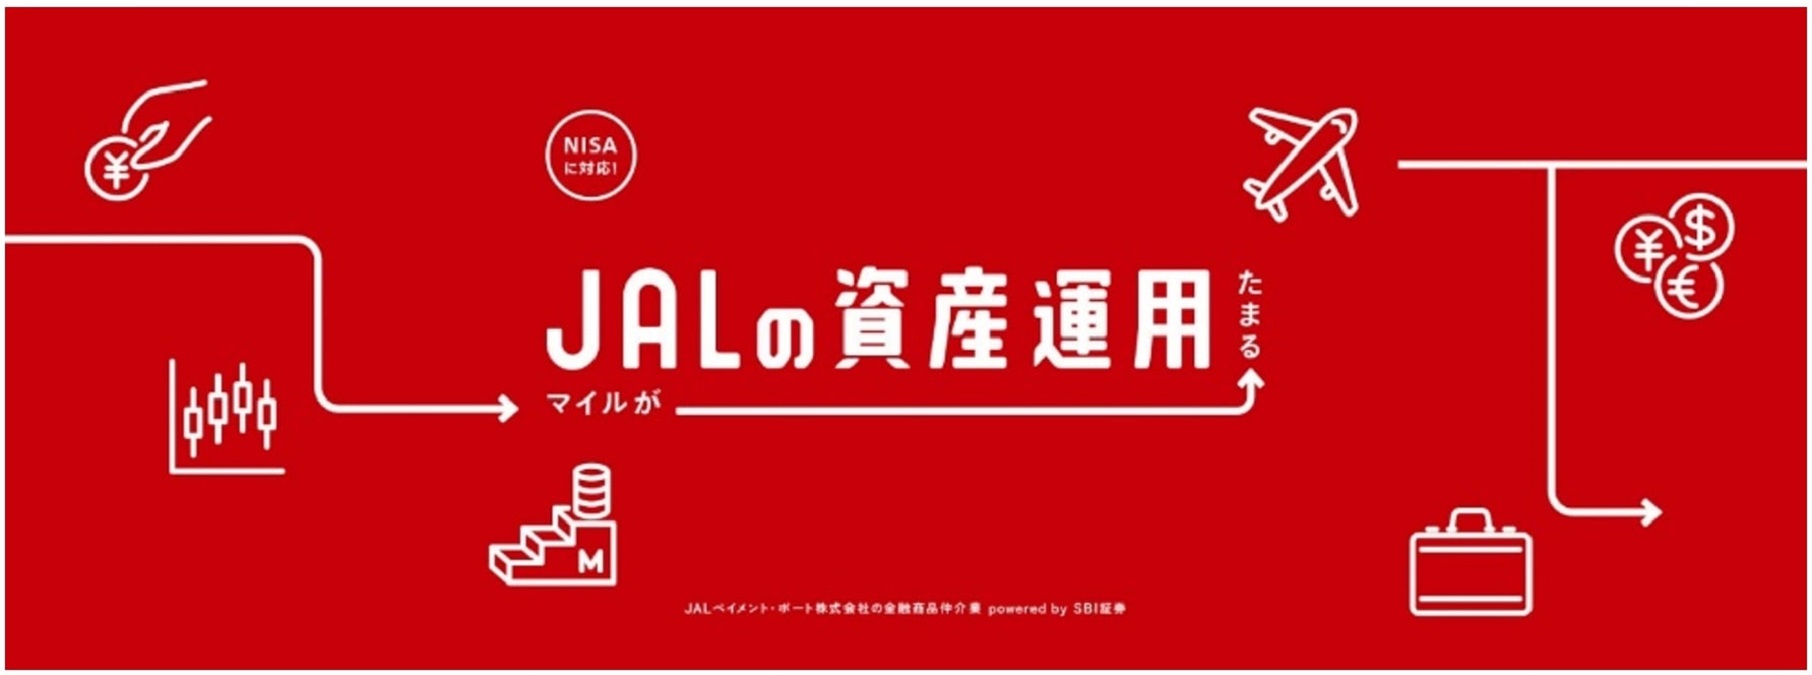 「JALの資産運用」サービスを開始　投資信託の保有でマイルが通常の最大1.5倍に　6月30日までリリース記念キャンペーンも実施